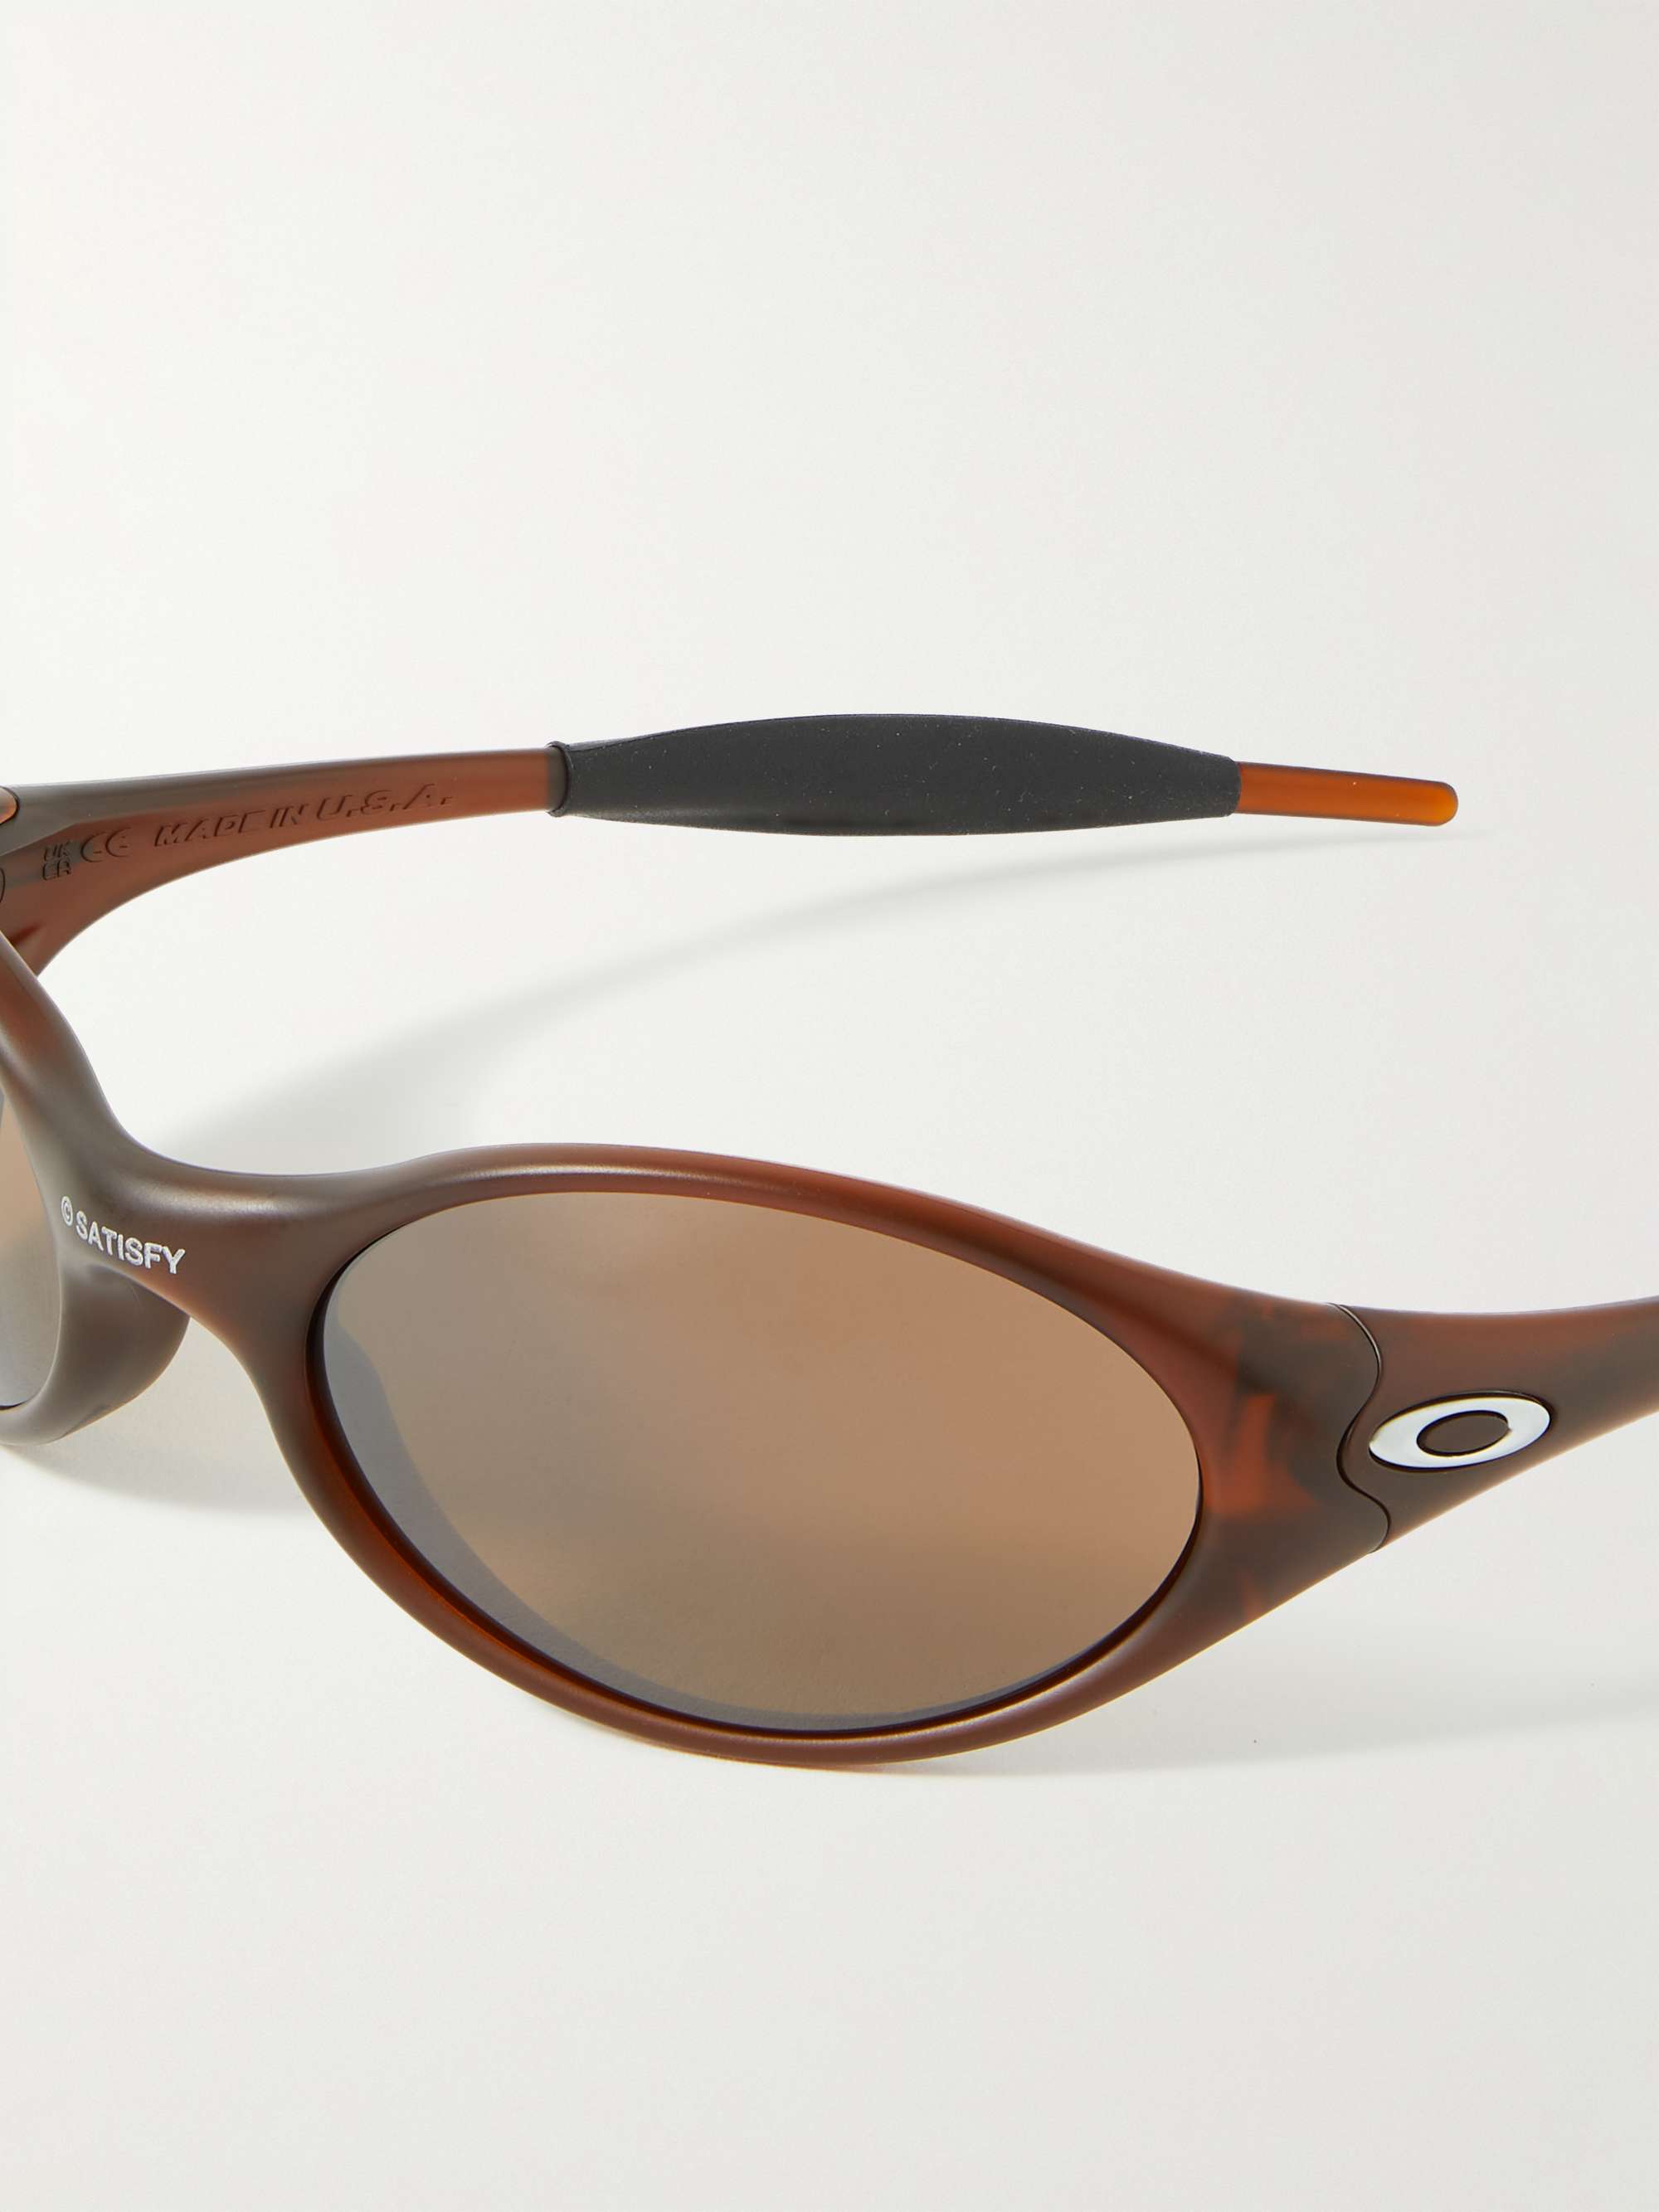 OAKLEY + Satisfy Oval-Frame Acetate Sunglasses